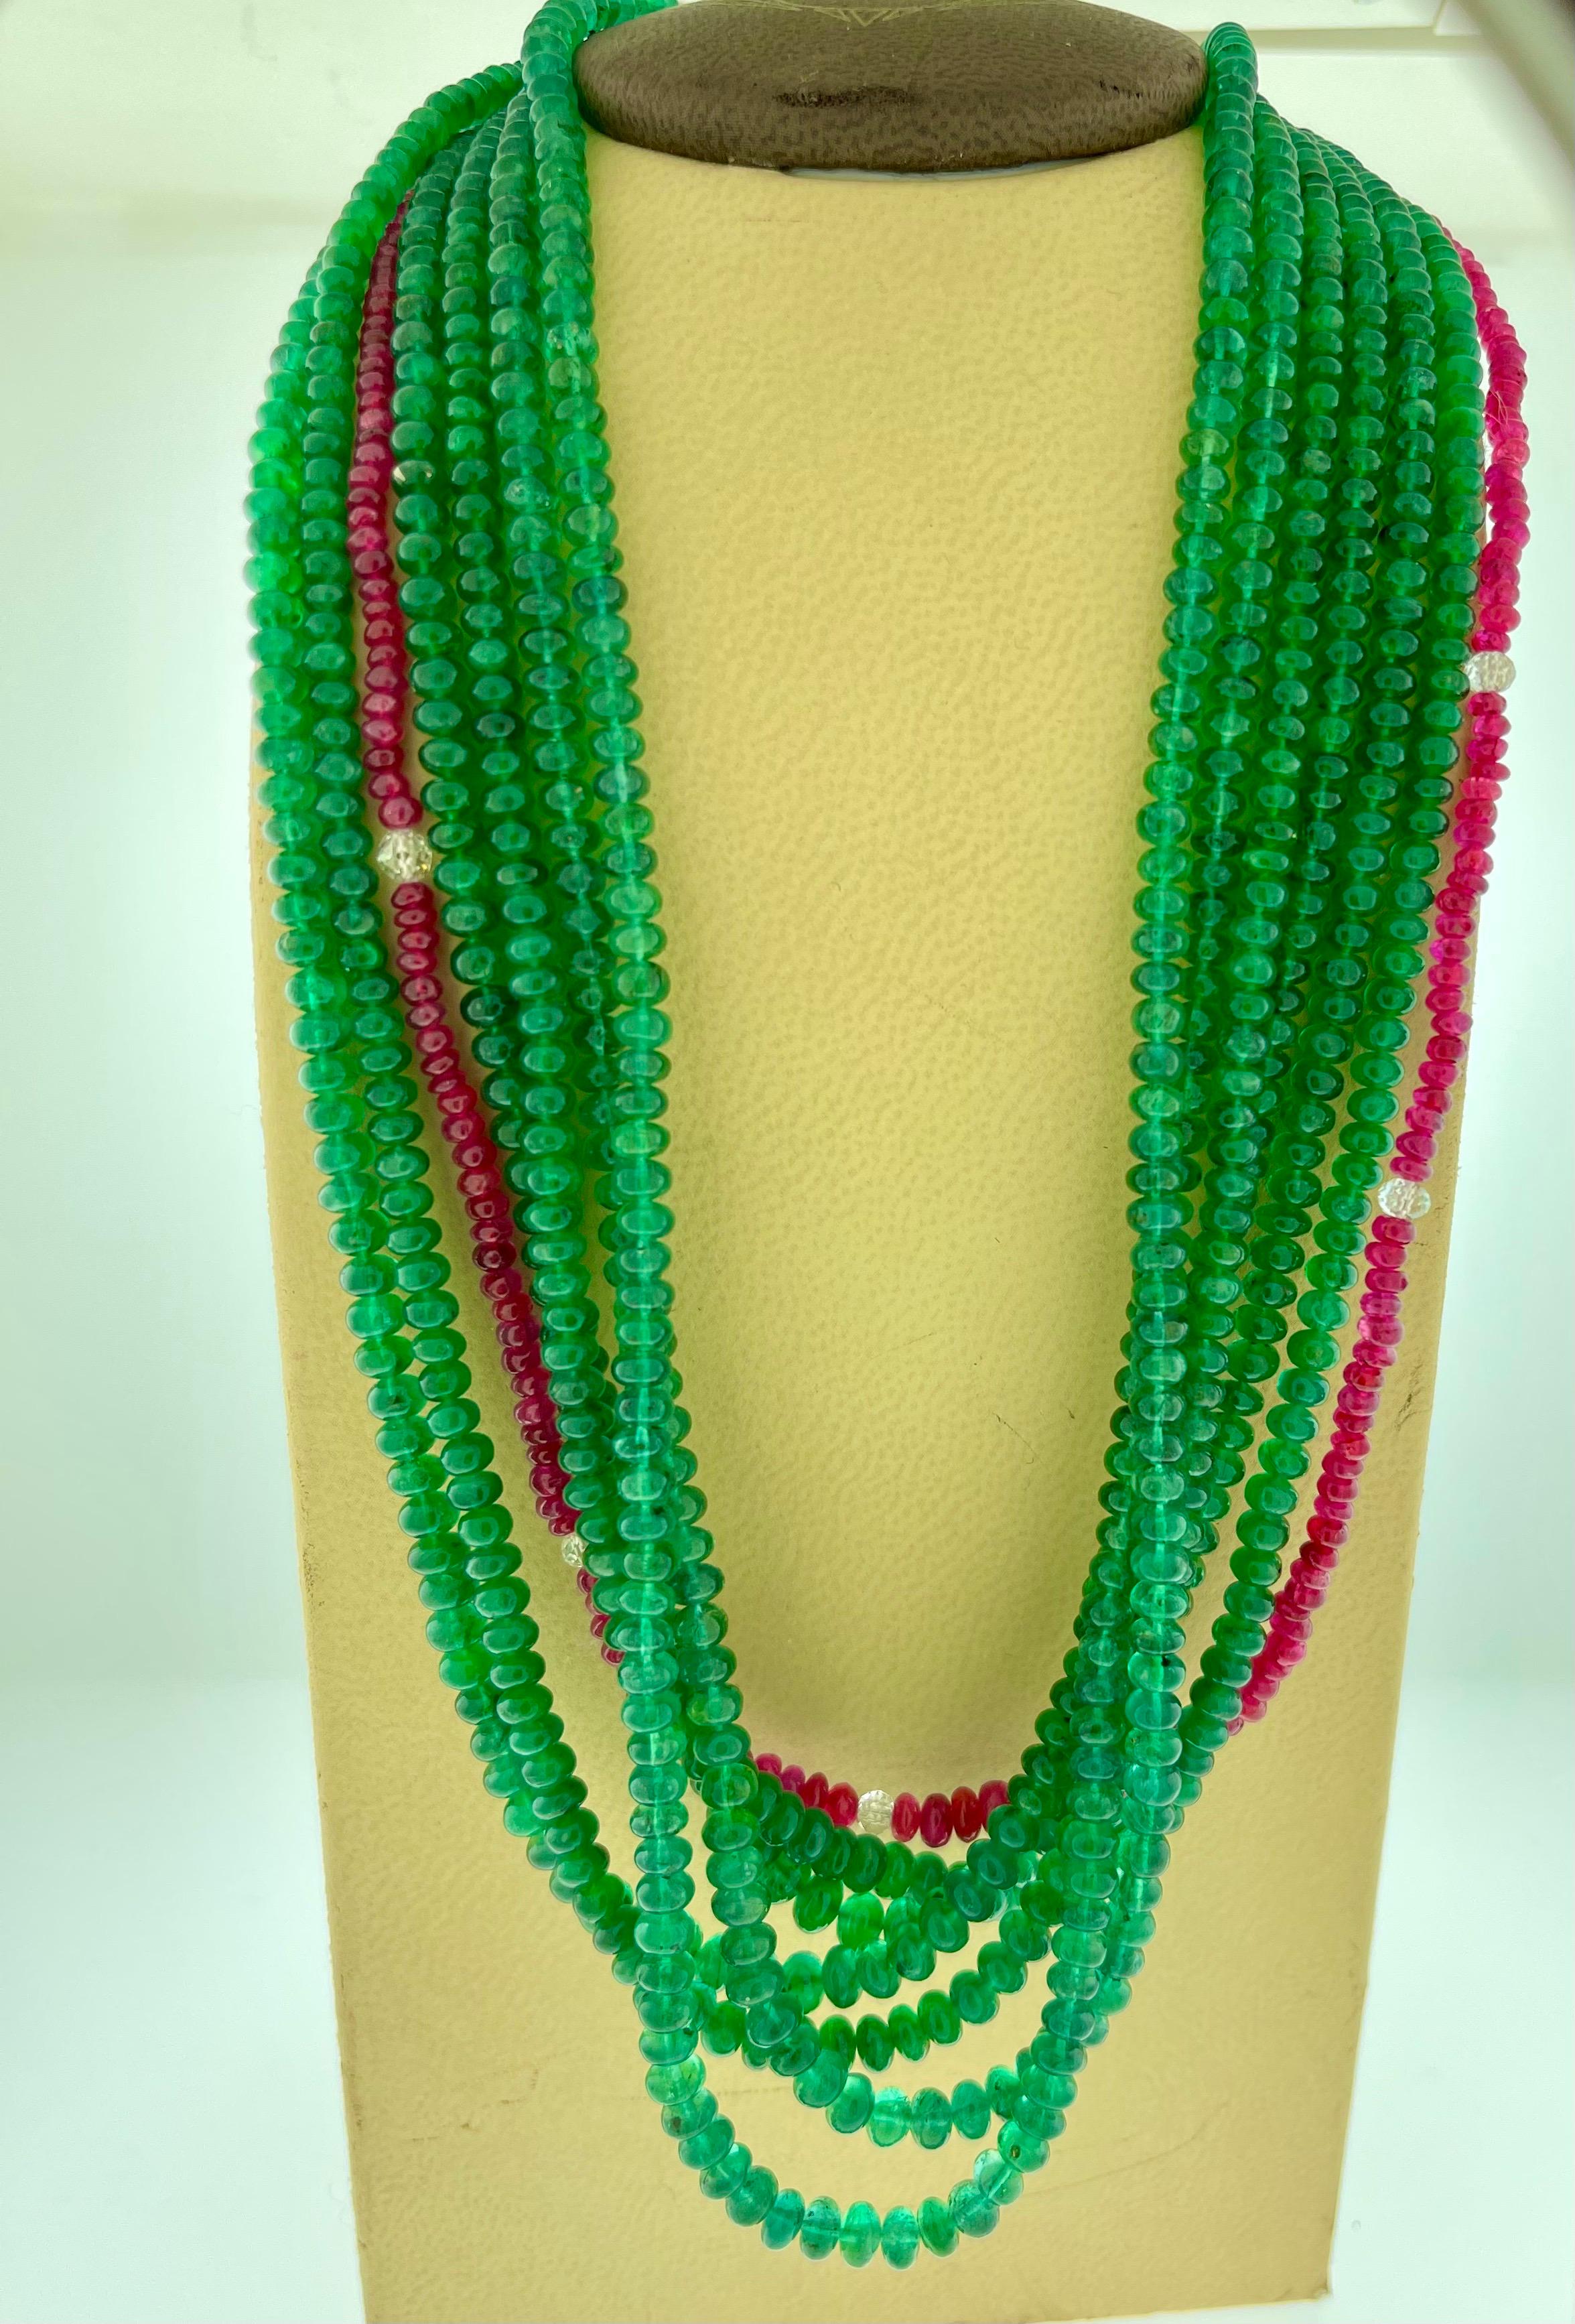 360 Carat Emerald, Burma Ruby and Diamond Beads Necklace 18 Karat Yellow Gold For Sale 4